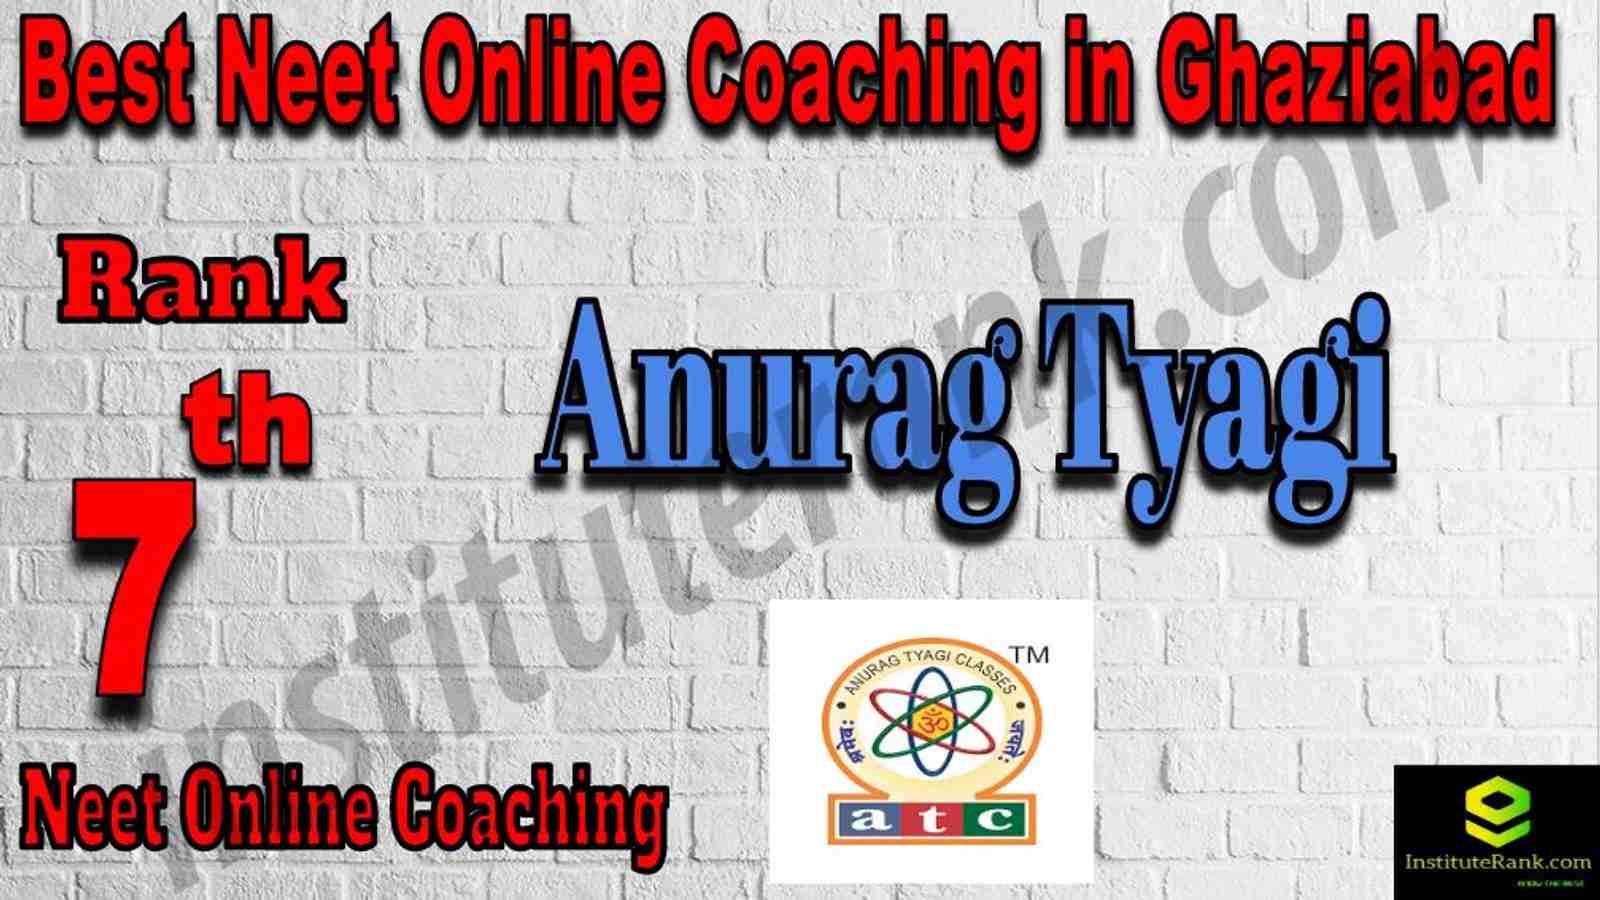 7th Best Neet Online Coaching in Ghaziabad